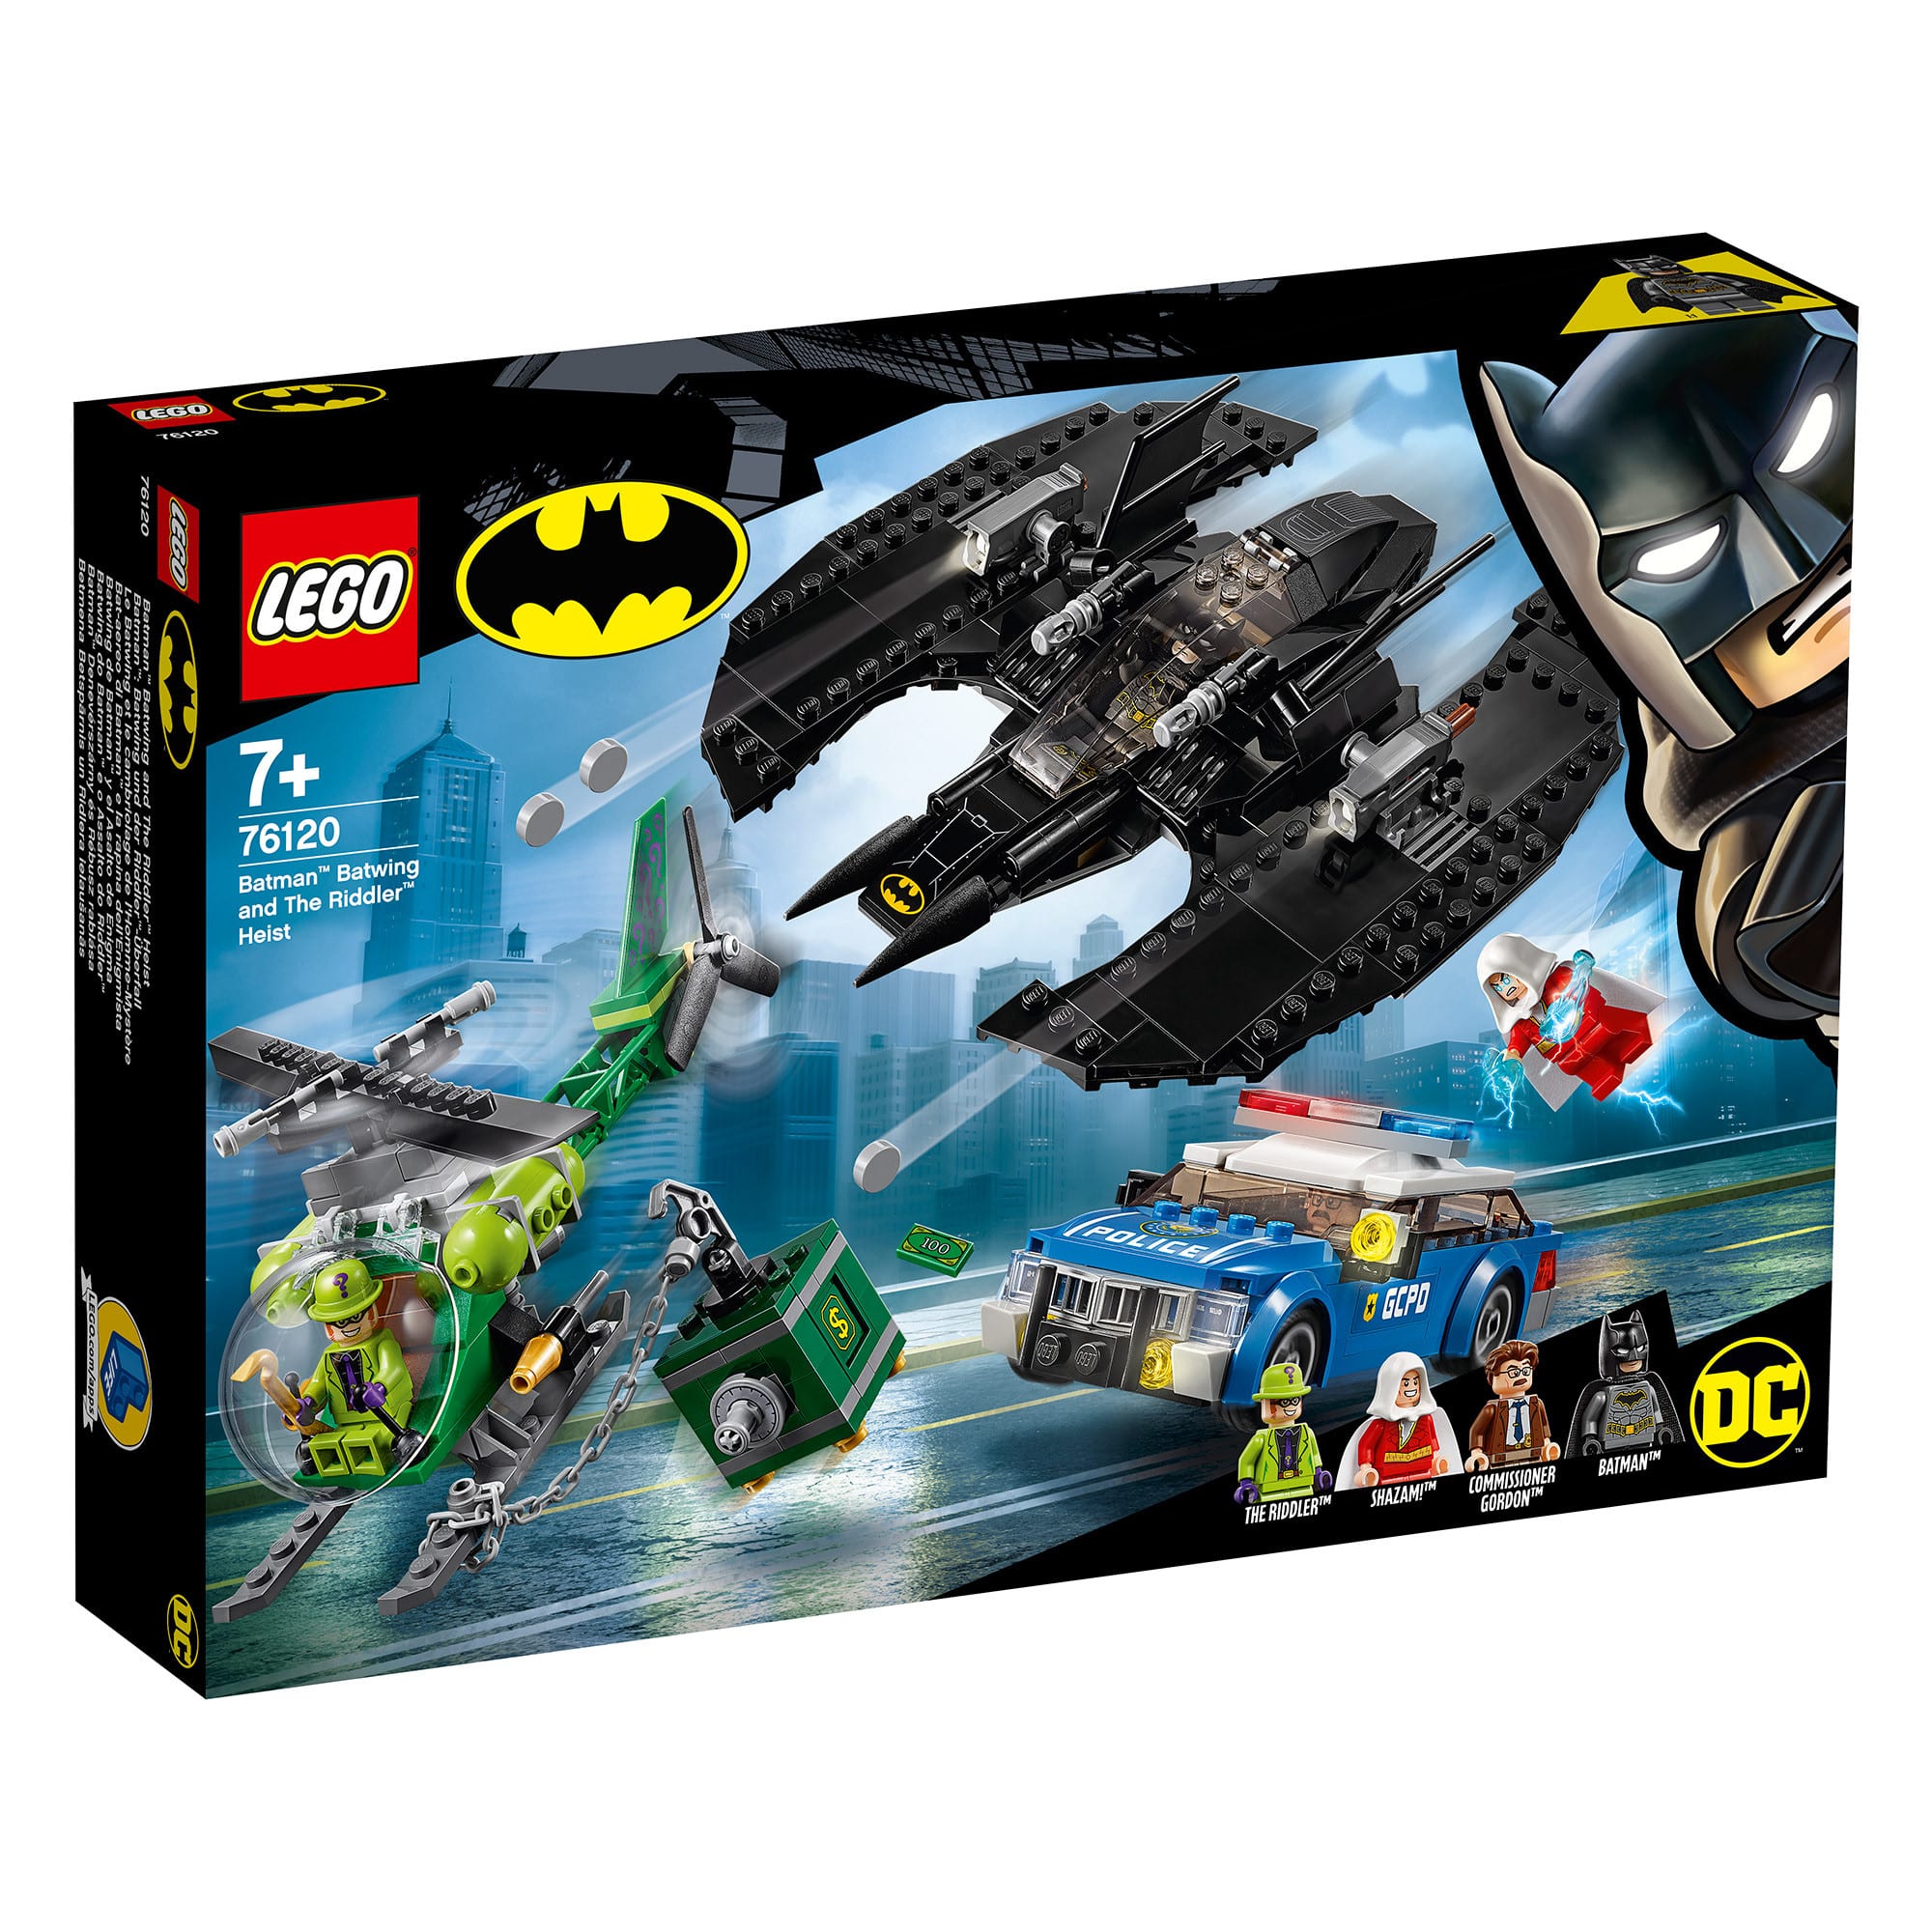 LEGO DC Batman - 76120 Batman Batwing And The Riddler Heist